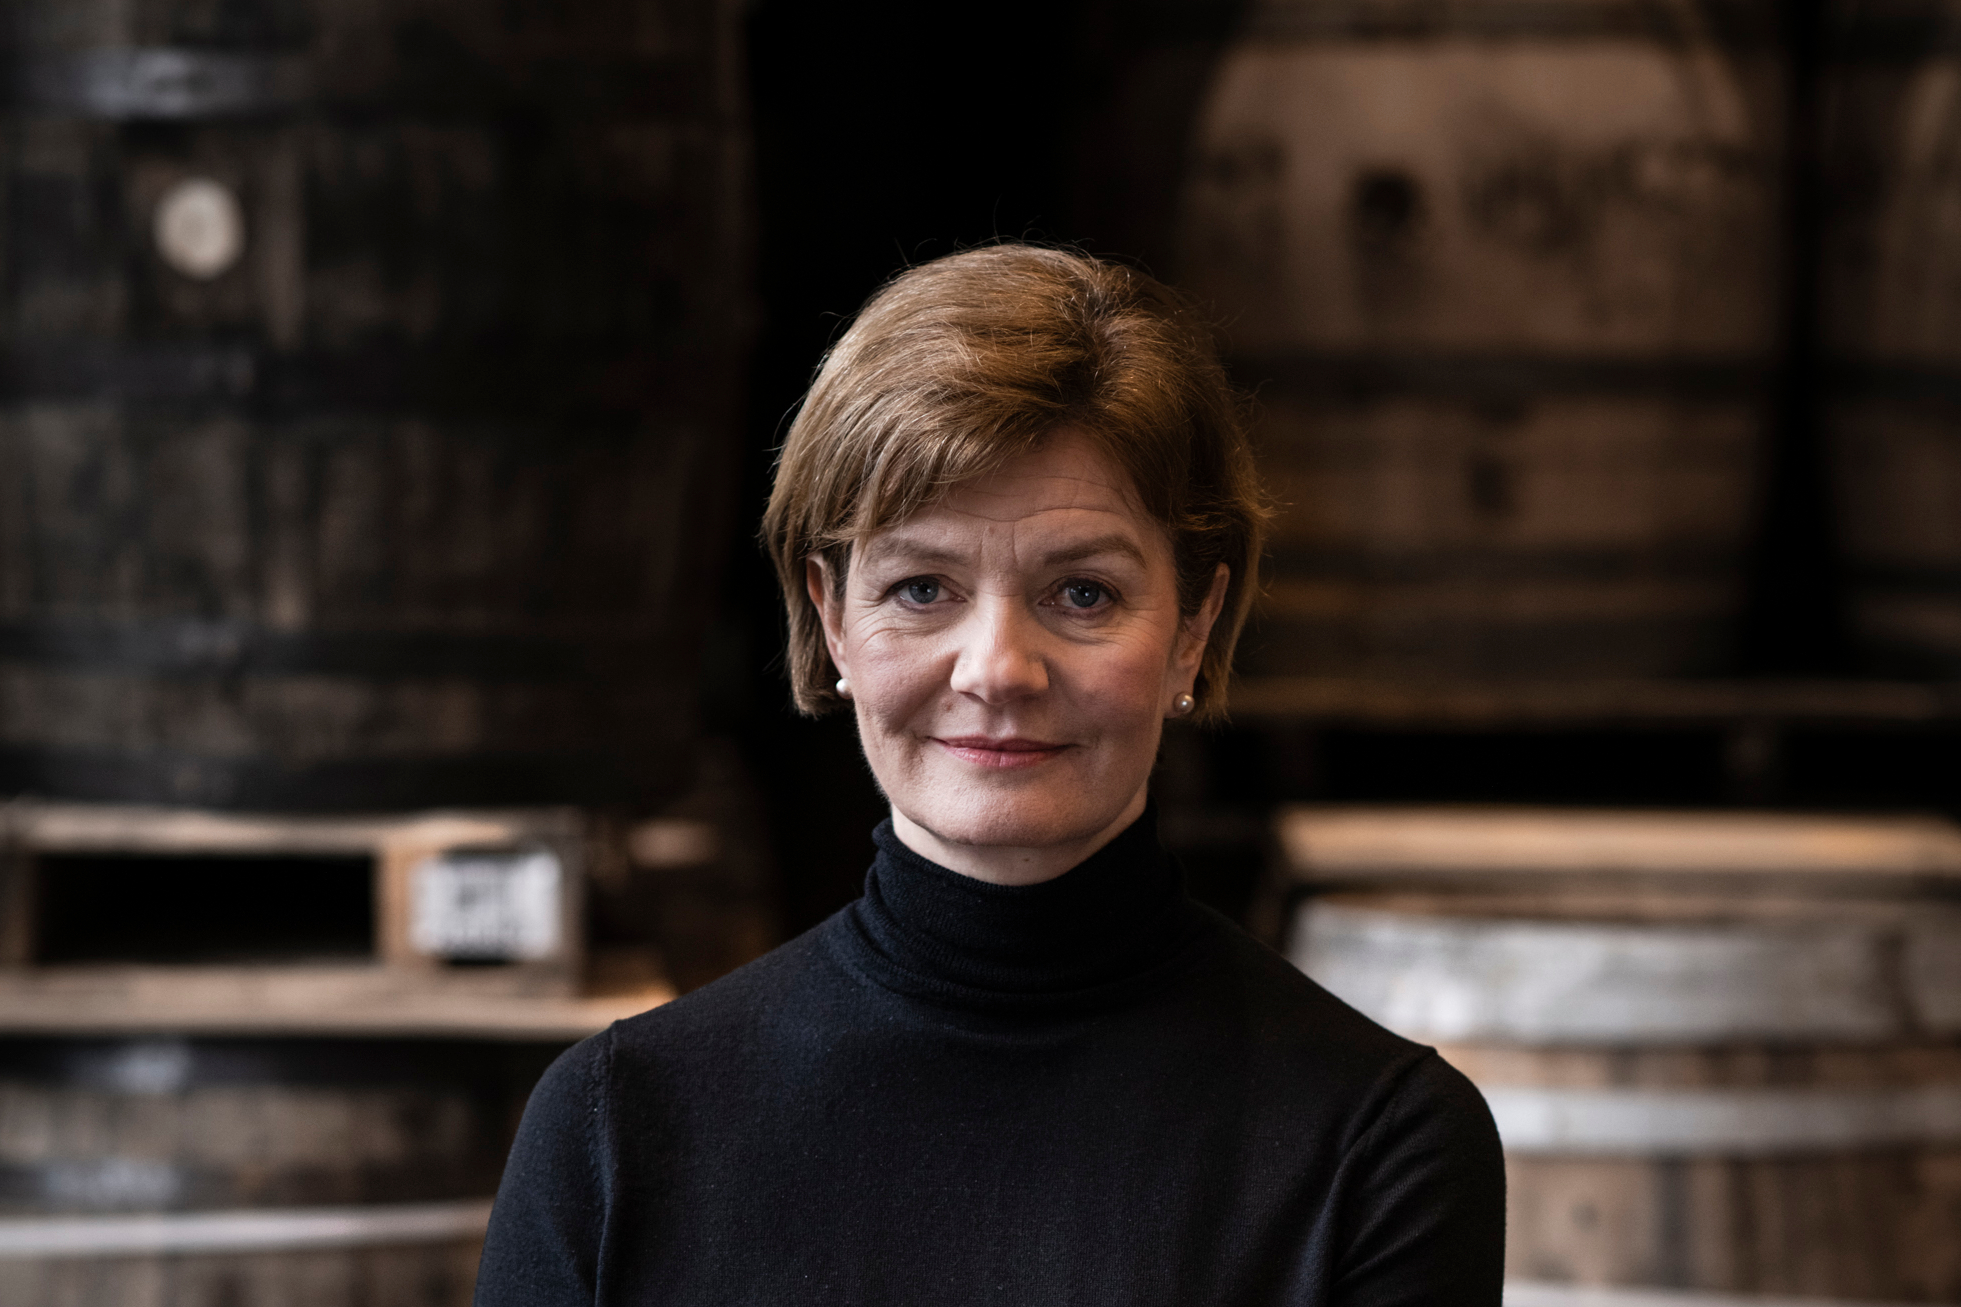 Stephanie MacLeod 在 1998 加入 Bacardi， 於 2006 開始擔任 John Dewar & Sons 的首席調酒師至今。